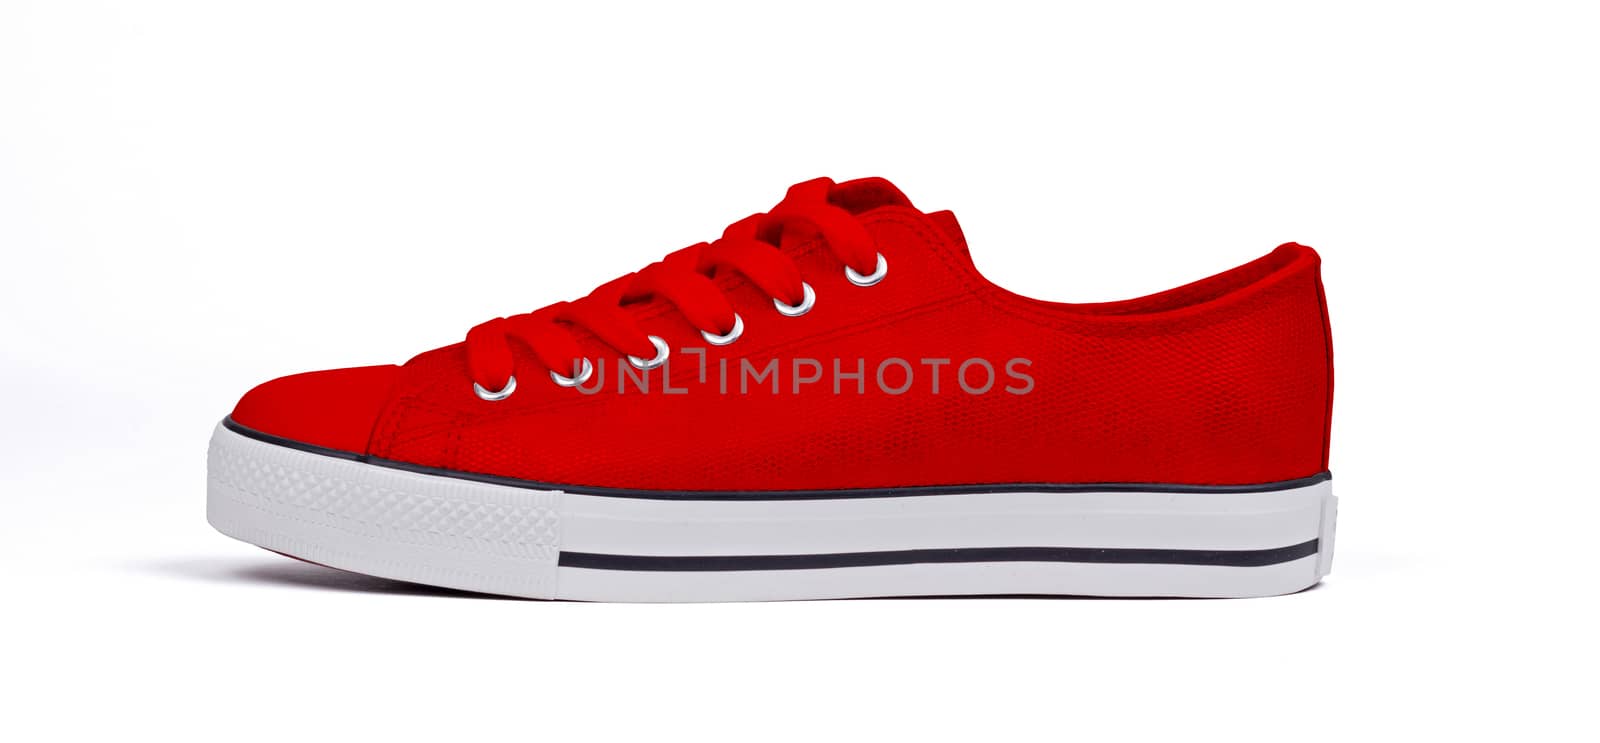 Single shoe isolated on white background - Red